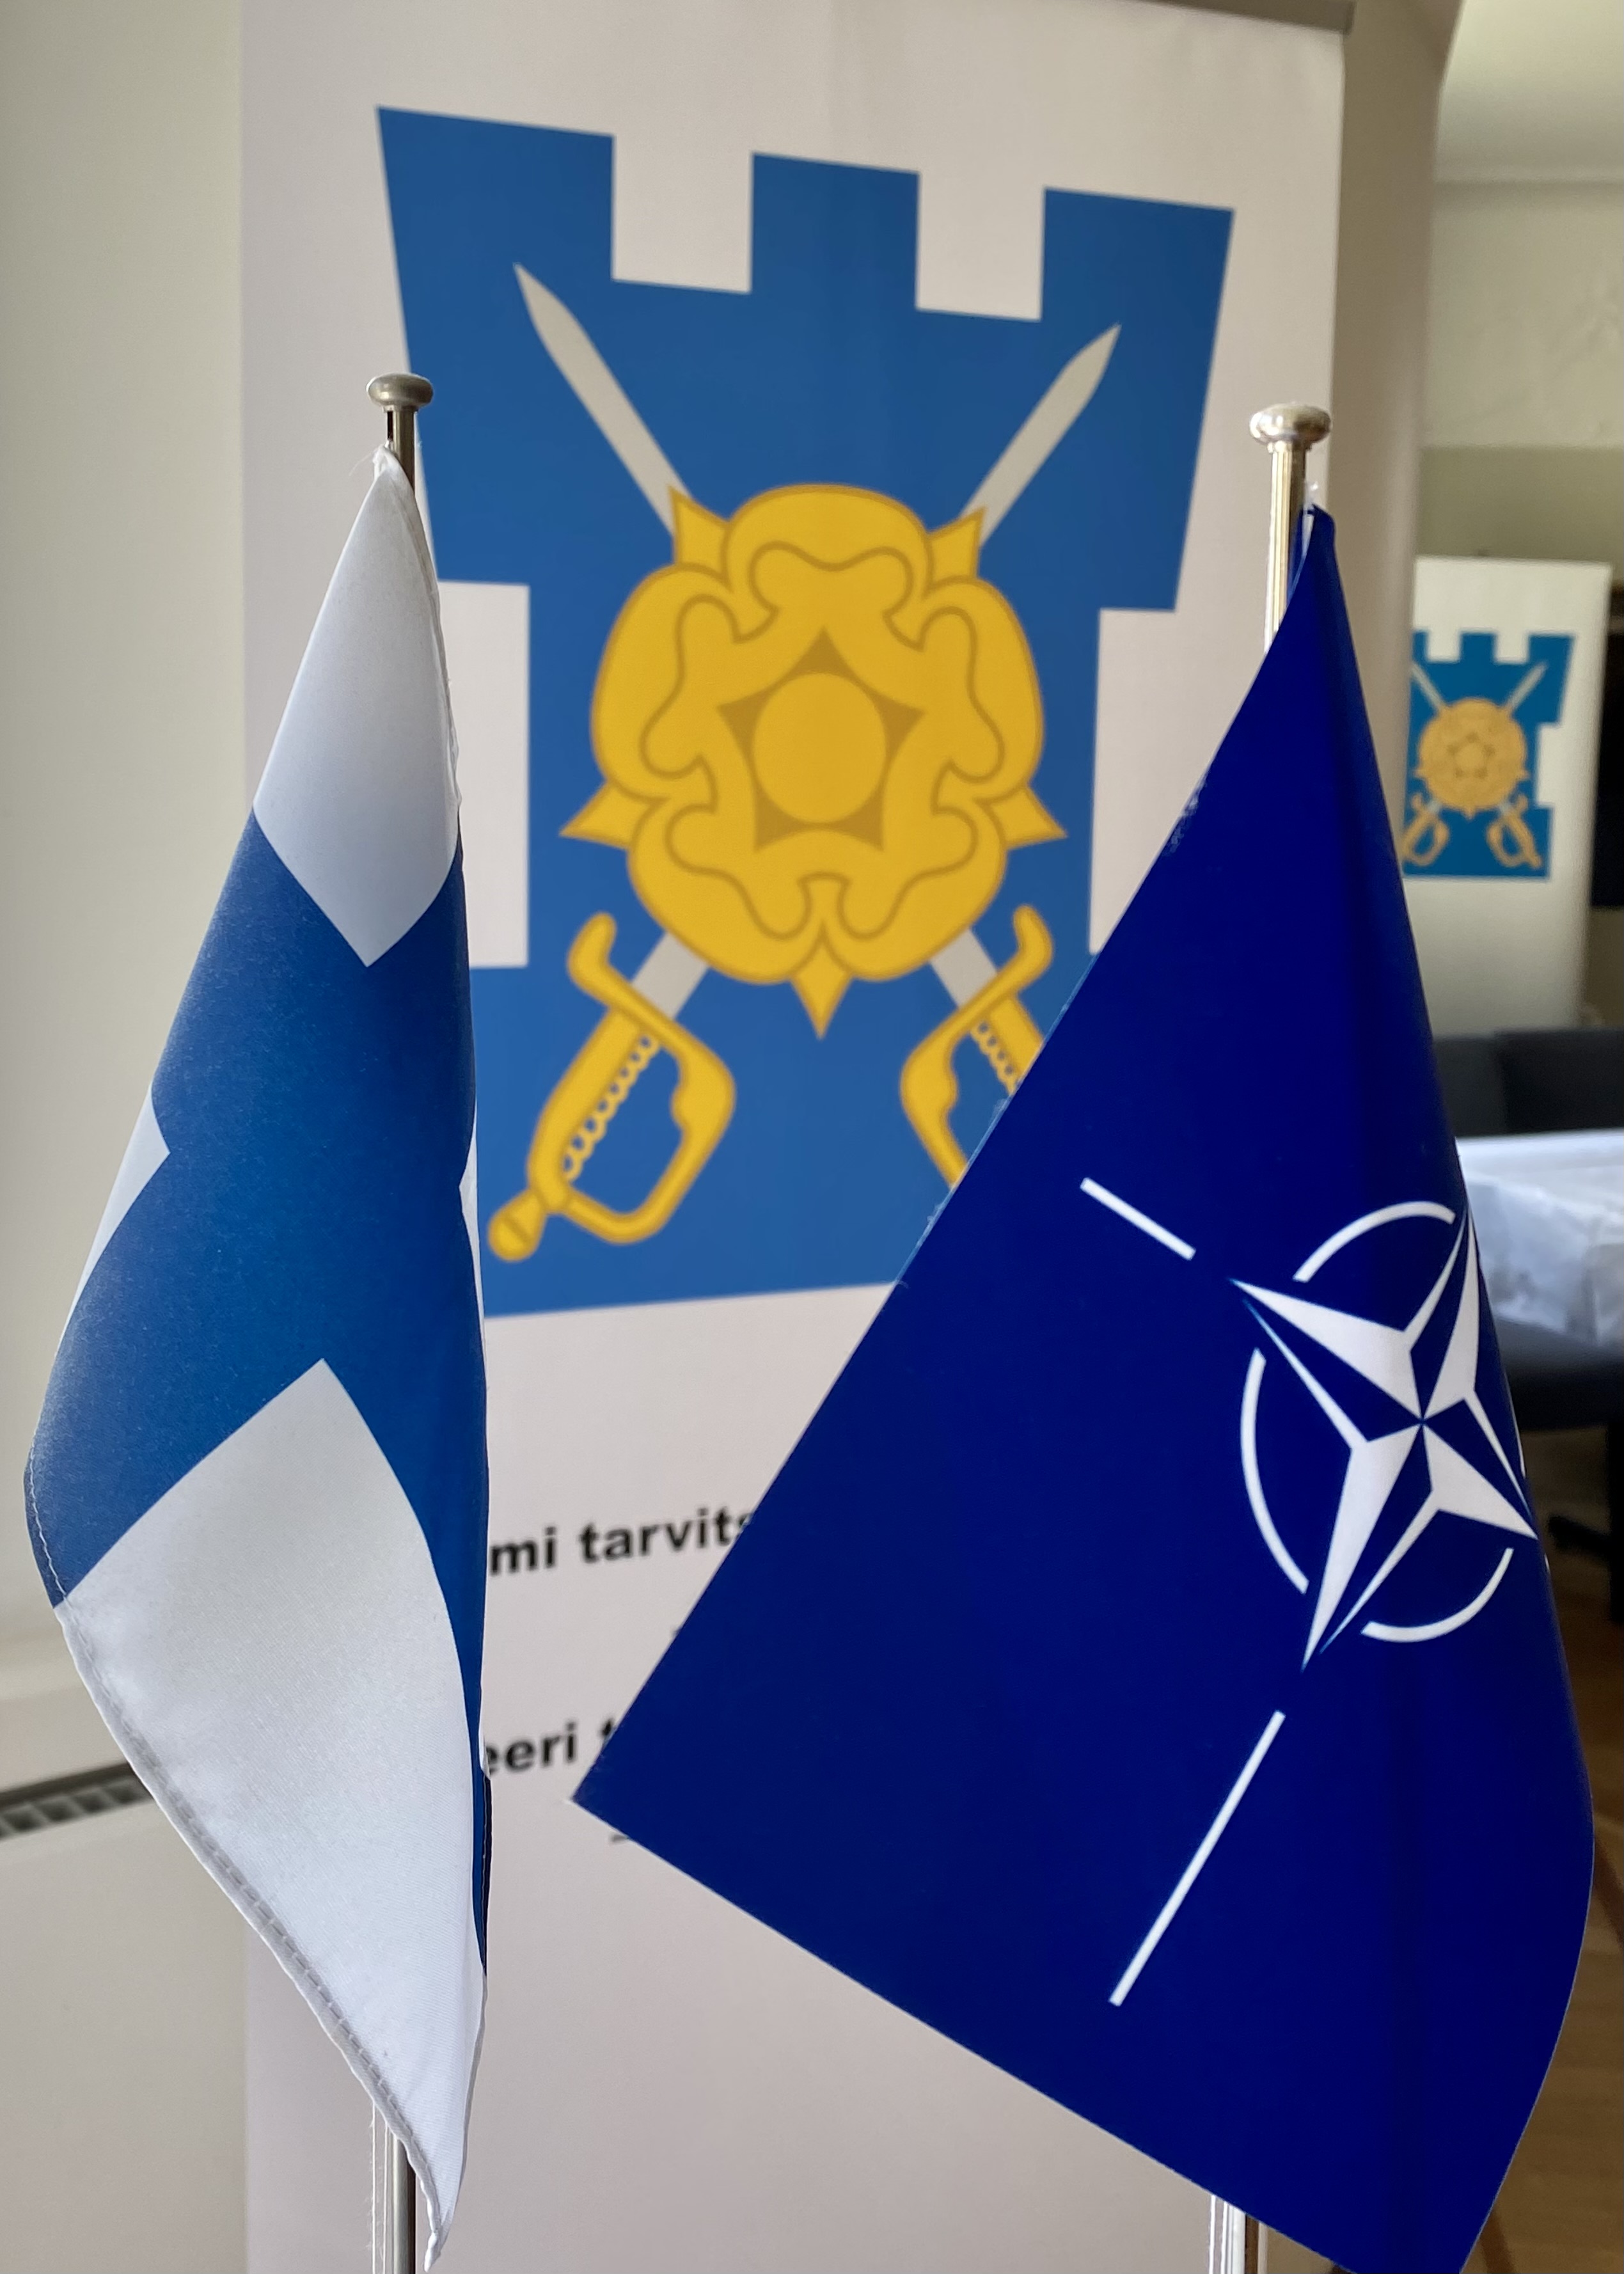 upseeriliitto.fi